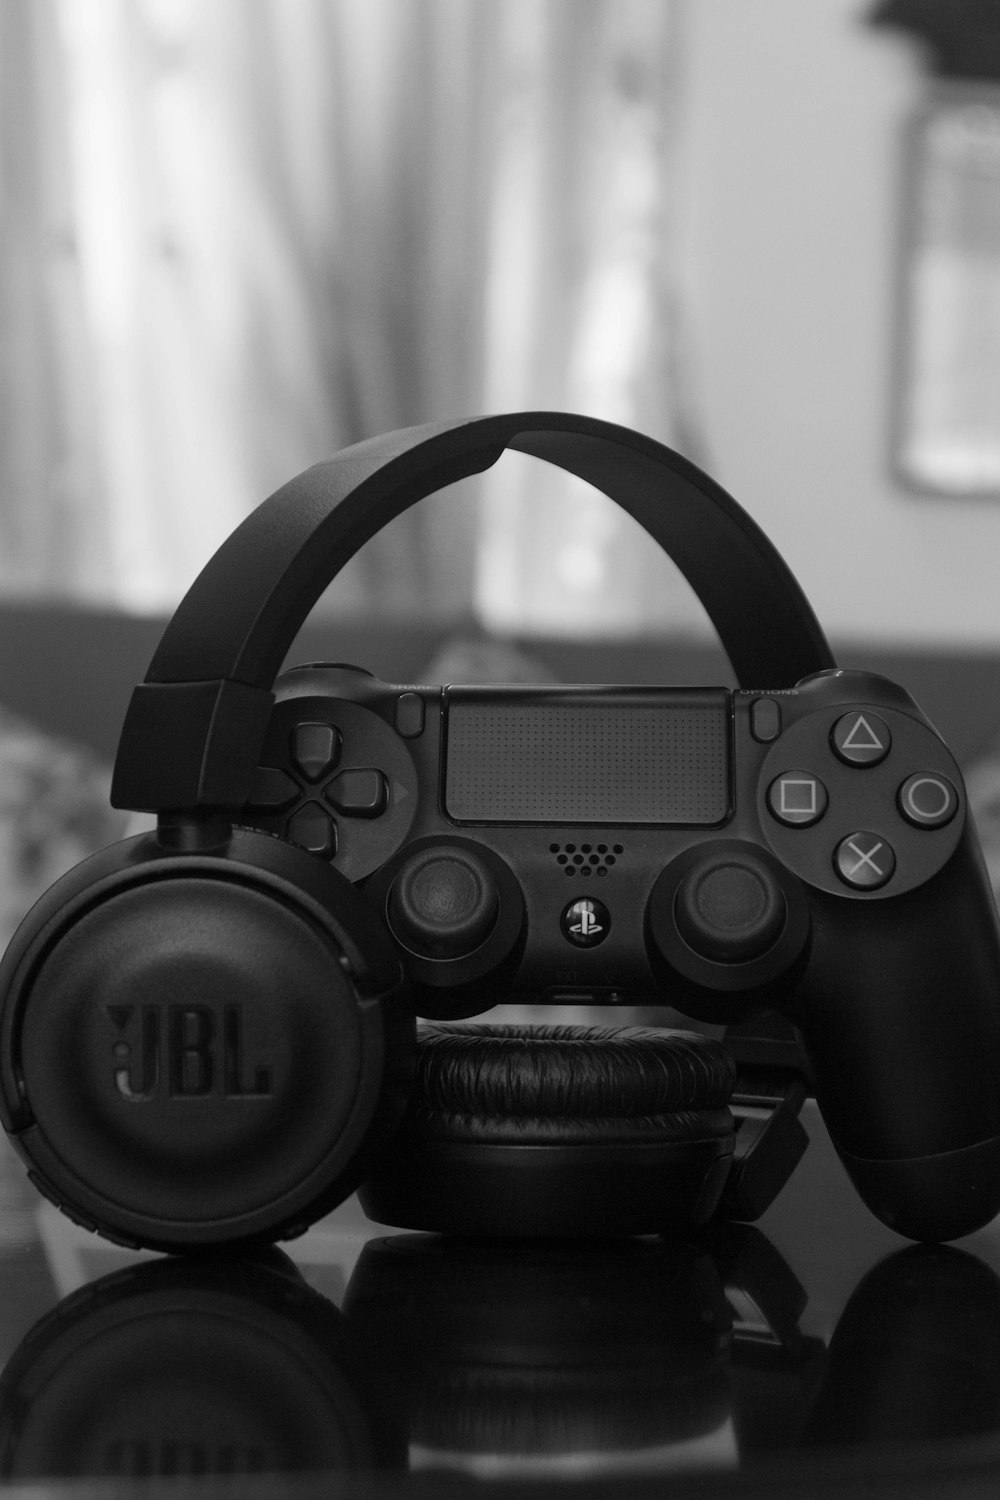 Sony PS DualShock 4 accanto alle cuffie wireless JBL